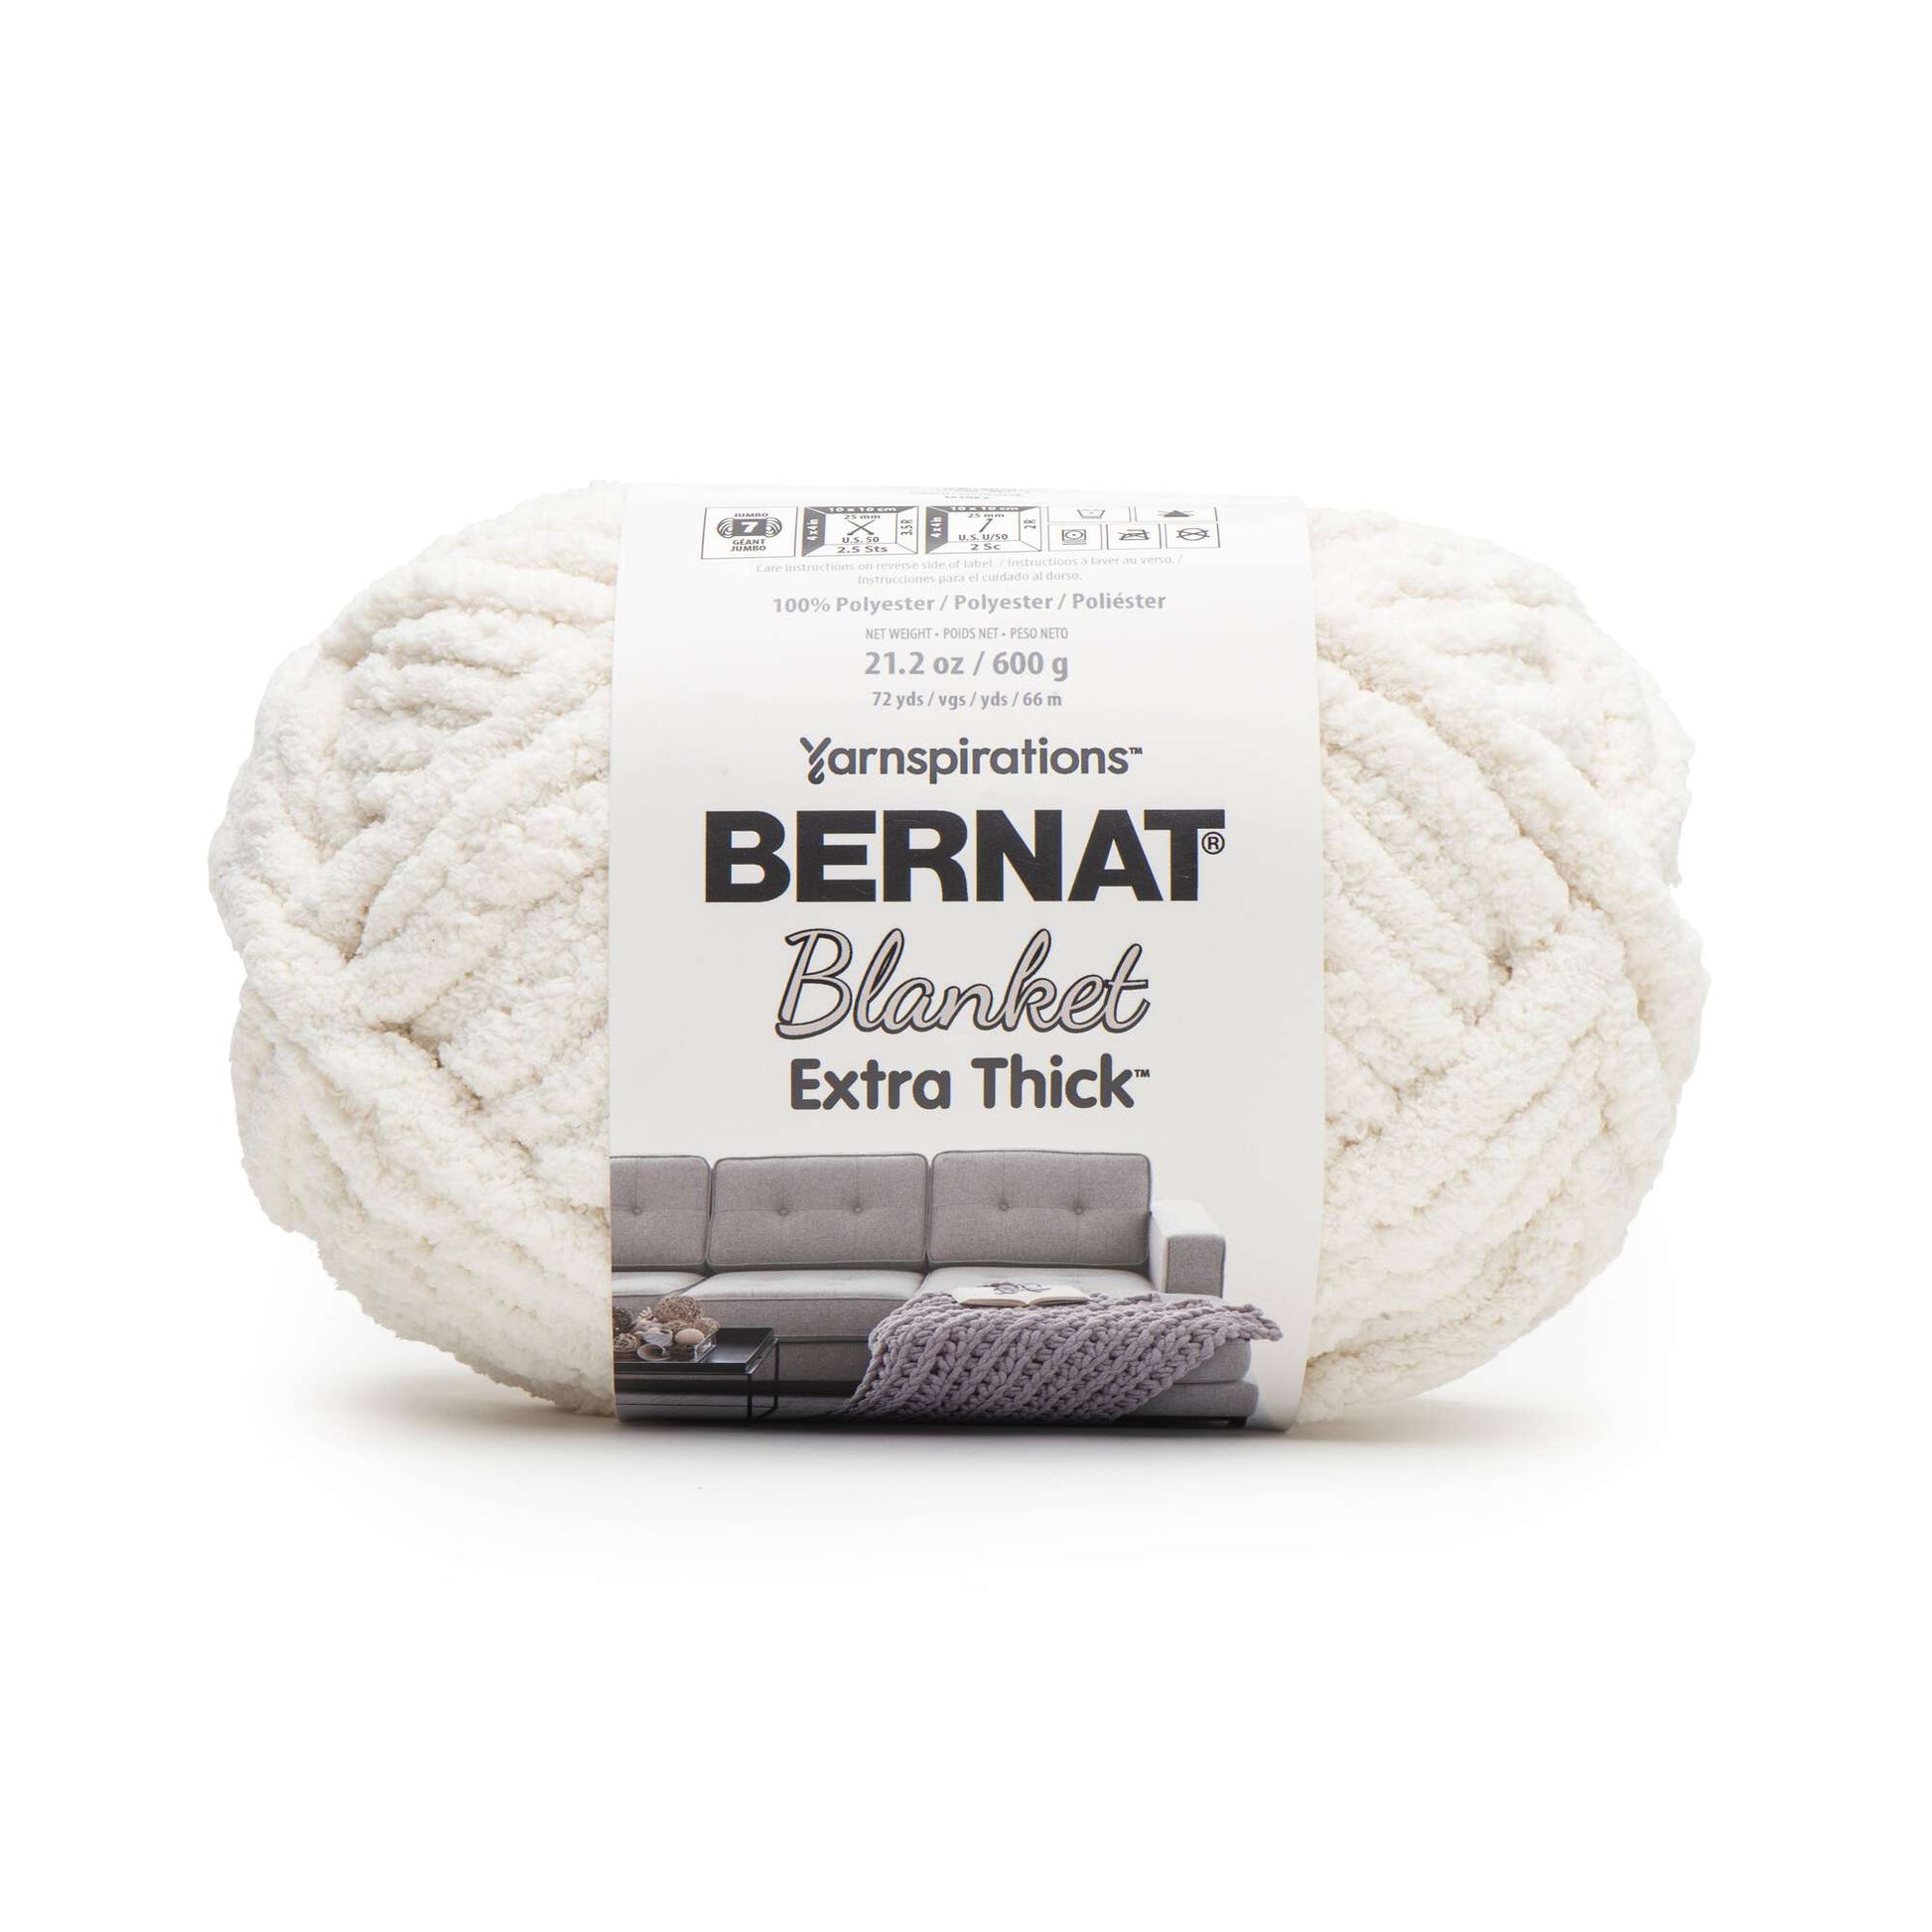 Bernat Blanket Extra Thick Yarn (600g/21.2oz) | Yarnspirations